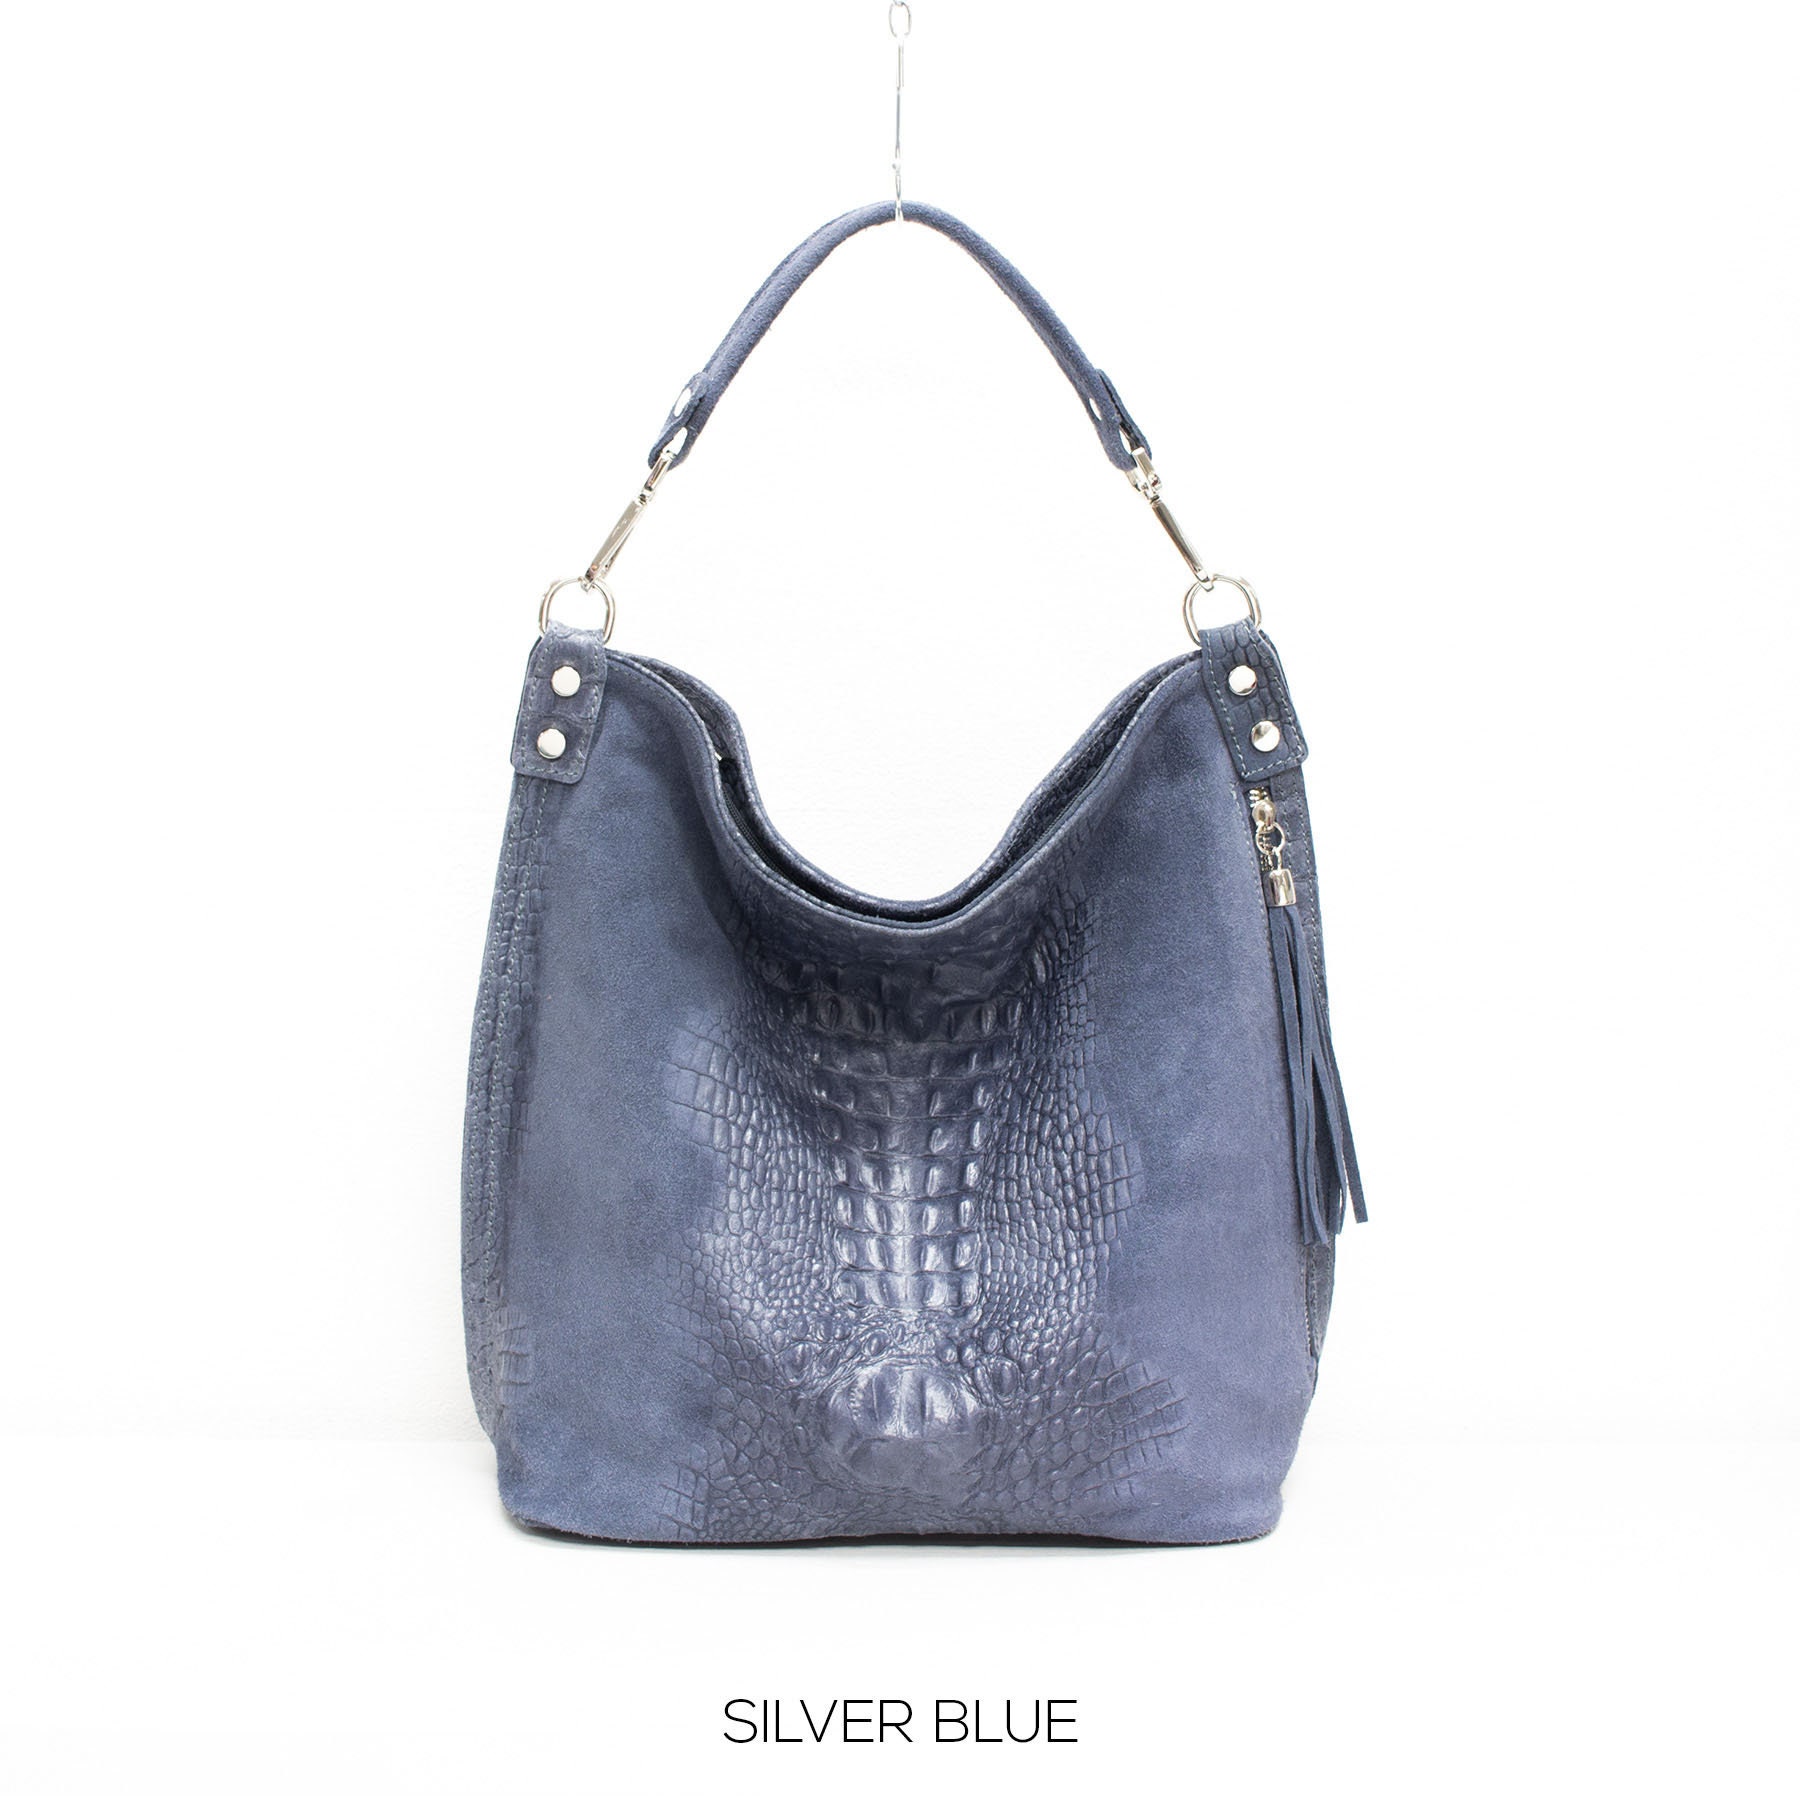 Linen Hobo Bag With Blue Details – Kritenya-Handwoven & Handcrafted  accessories.